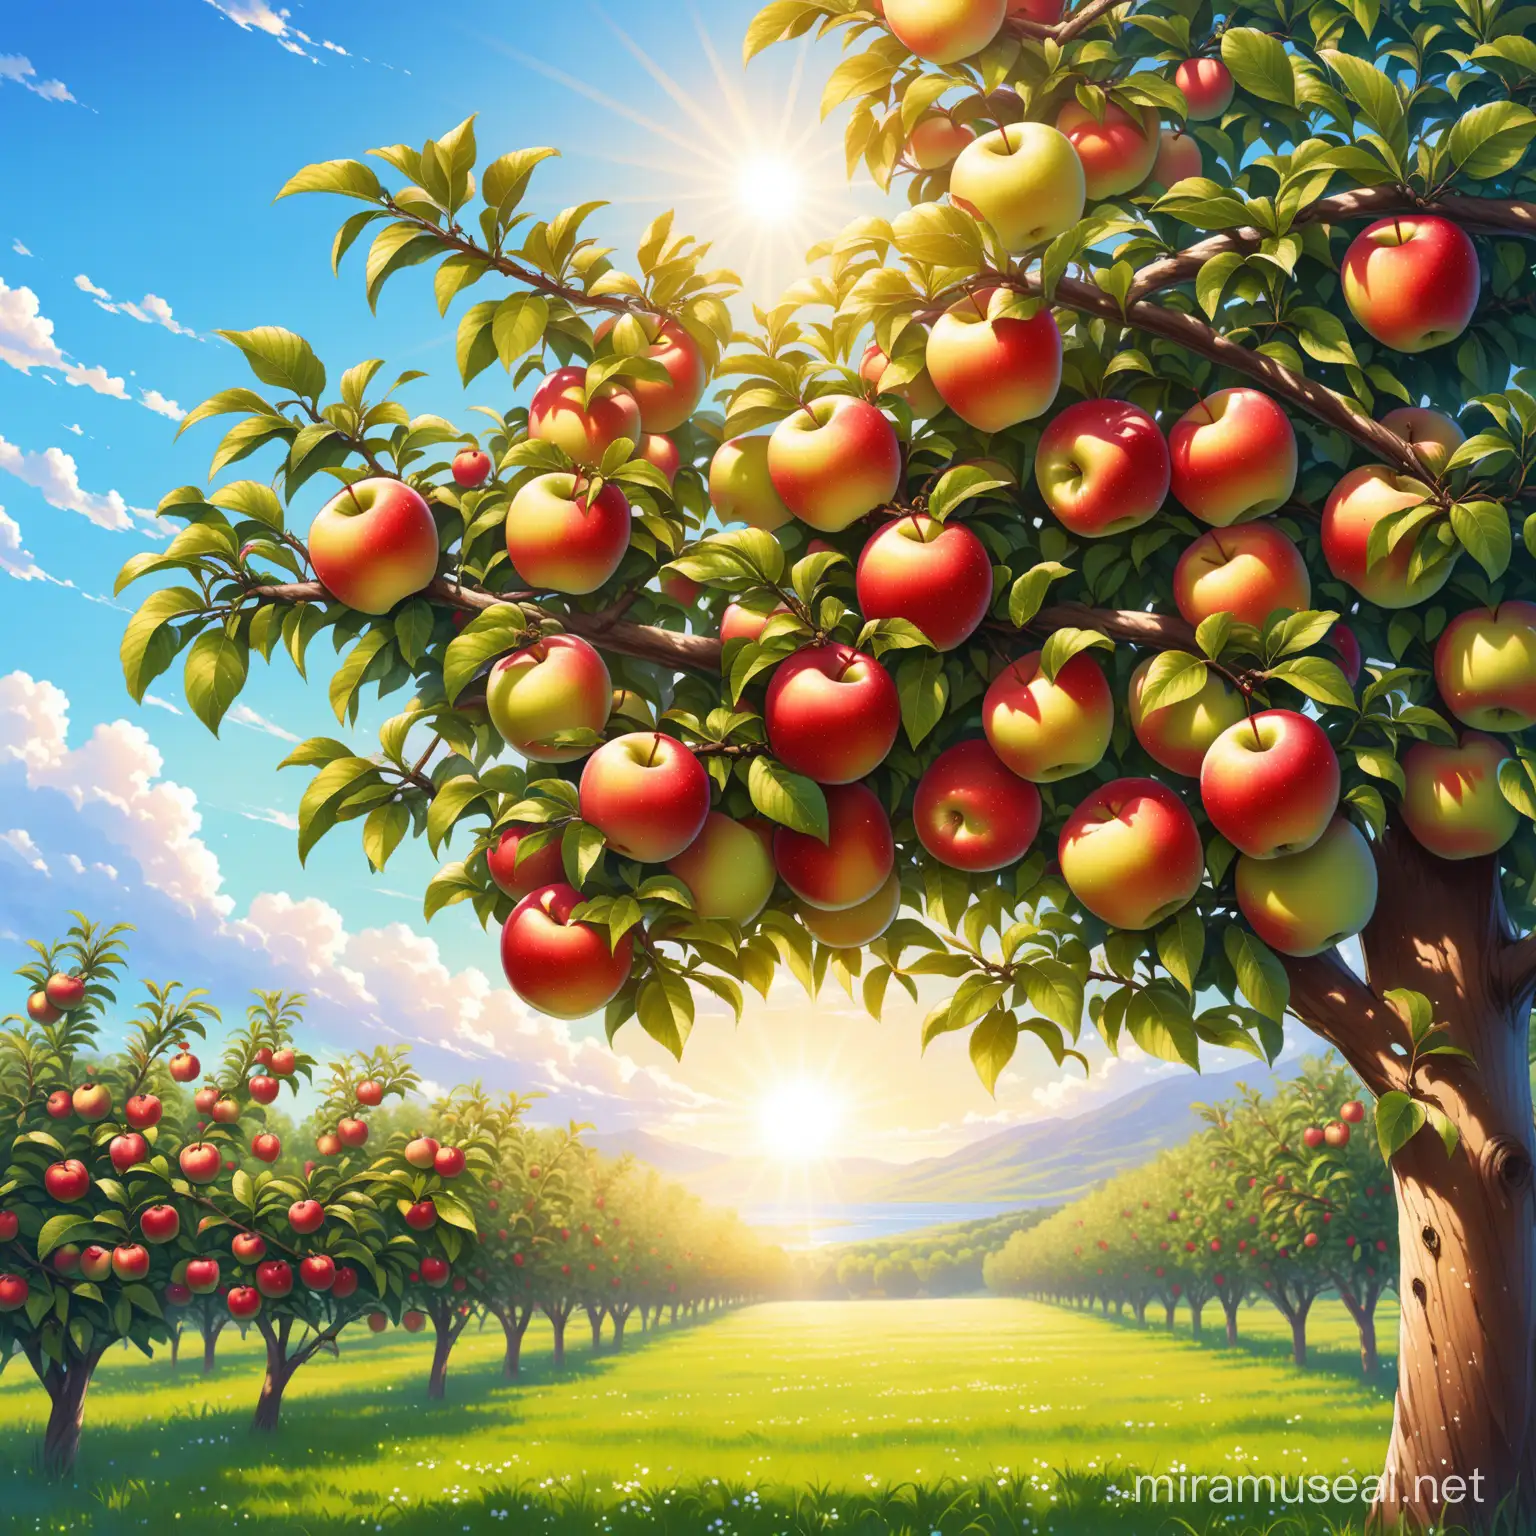 Summer Sunlit Apple Tree with Fruitful Bounty